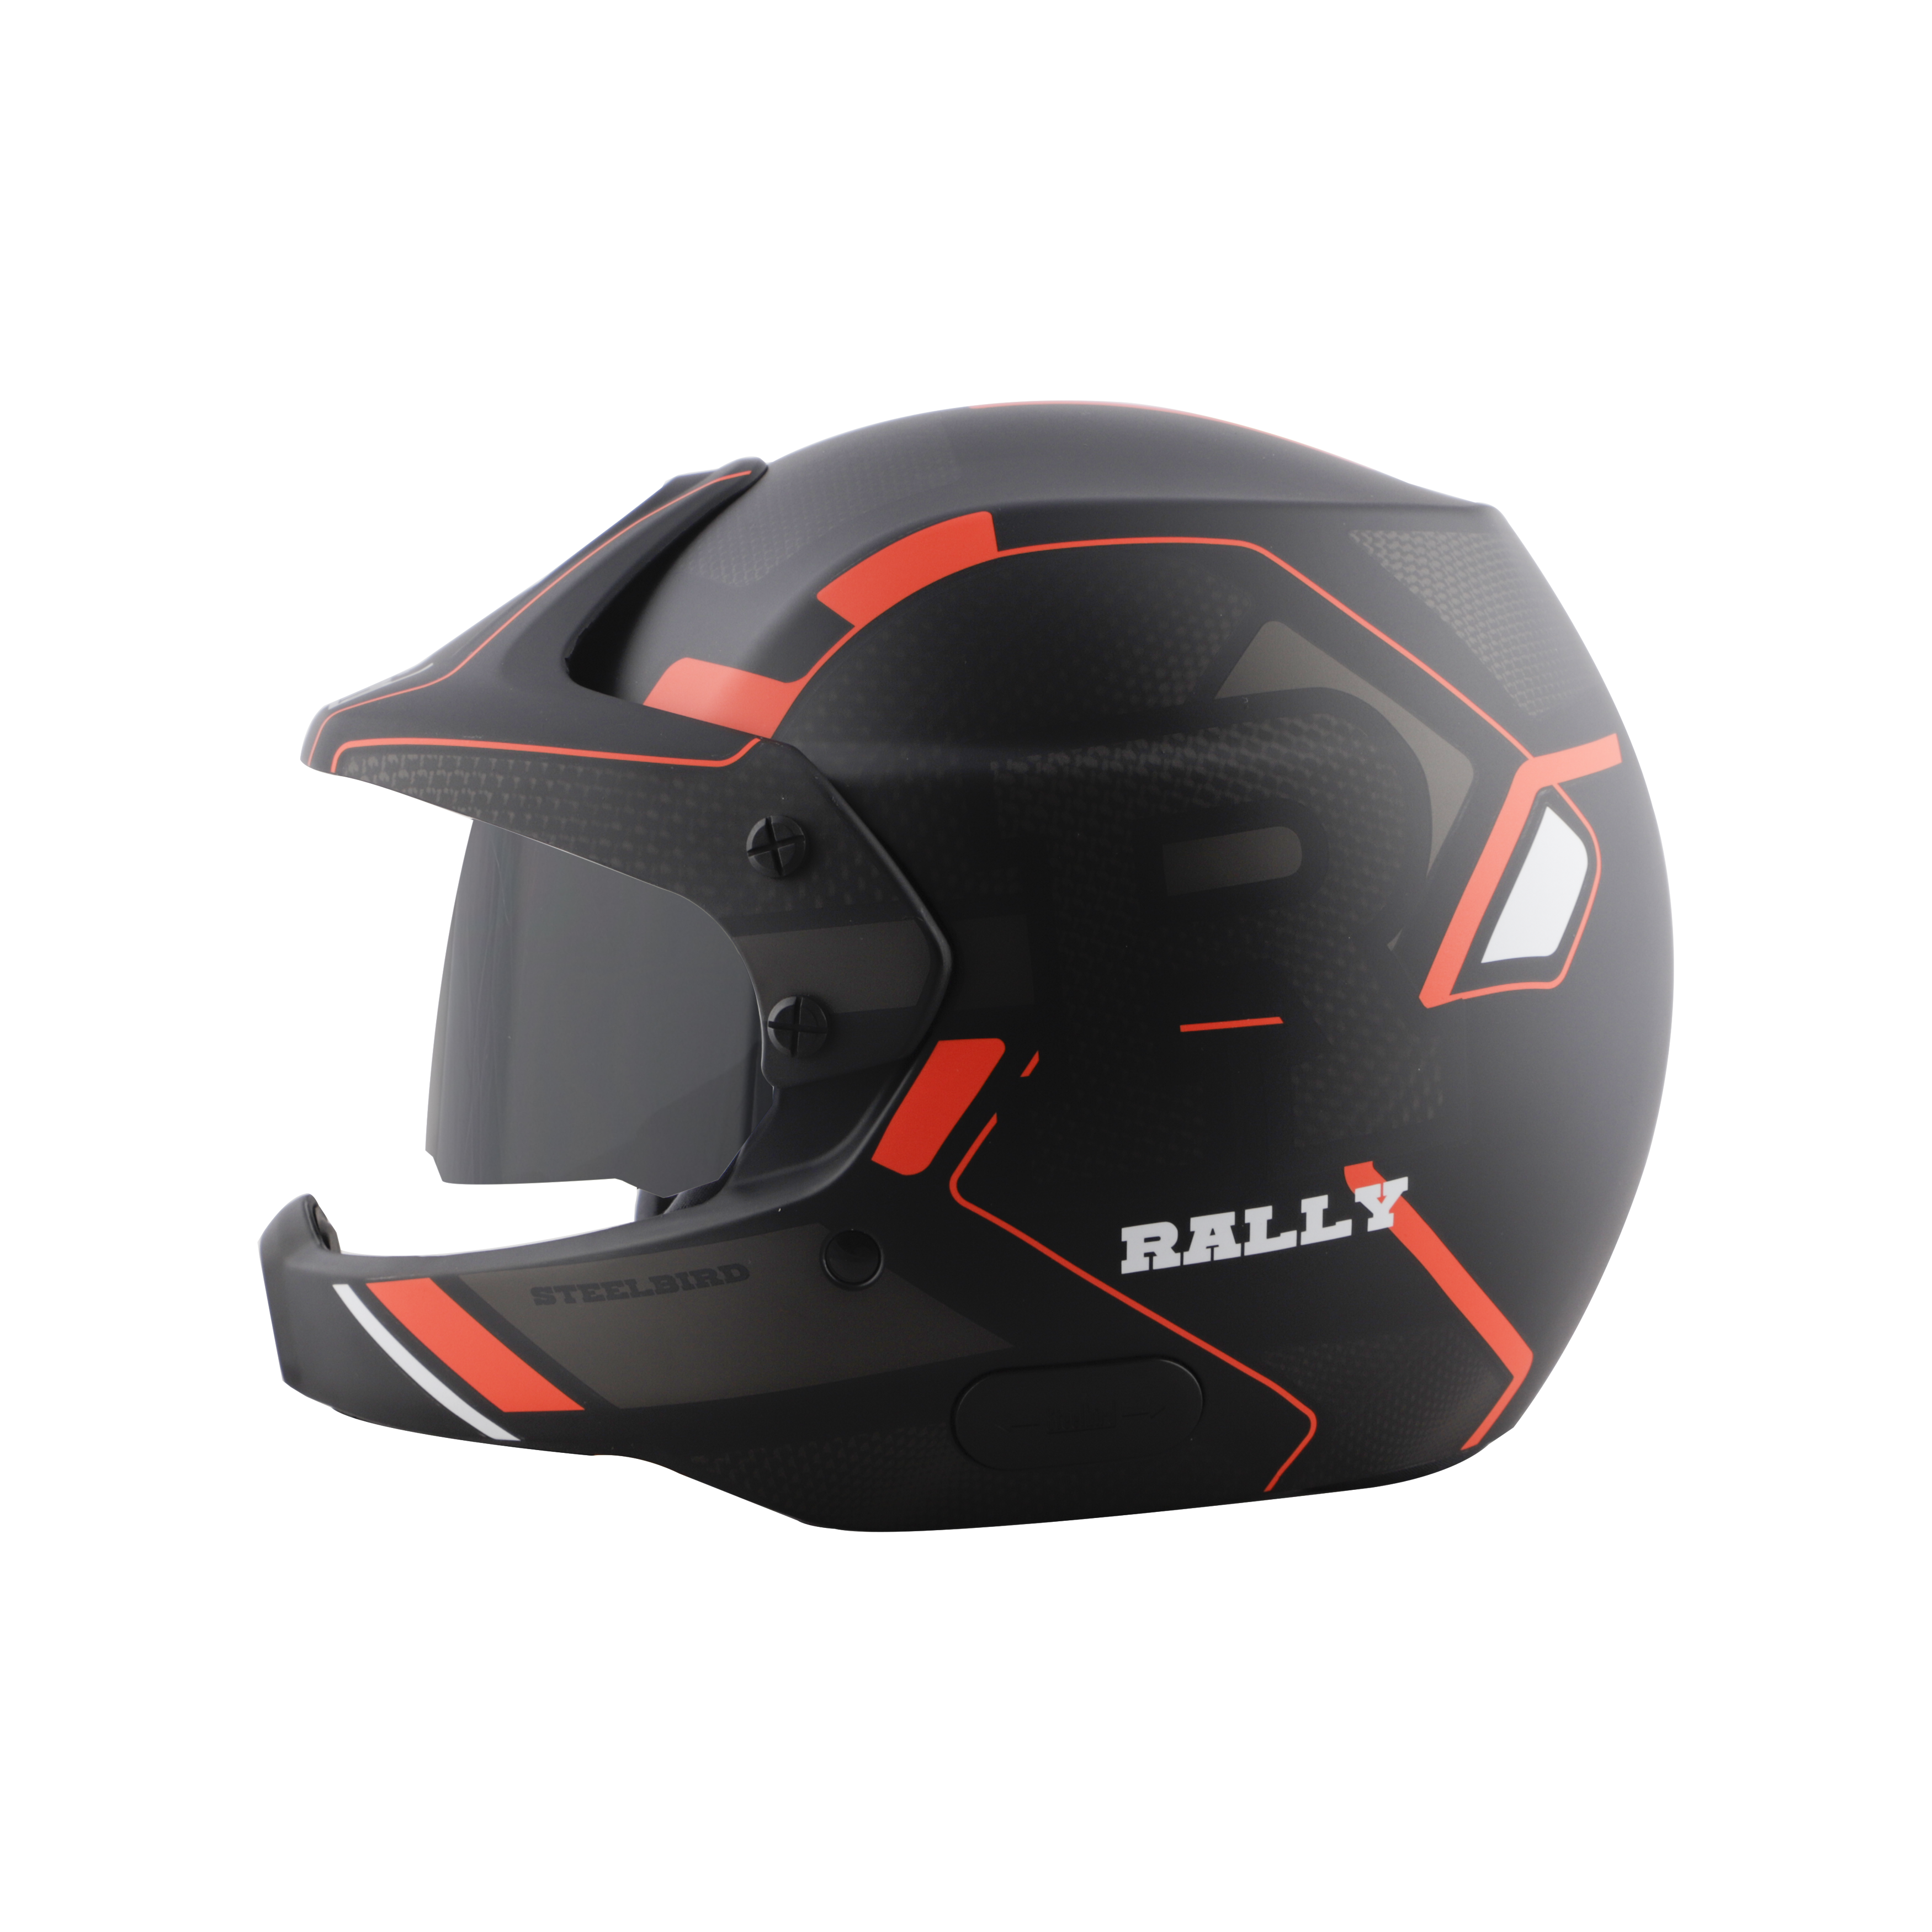 Steelbird 7Wings Rally Beat Open Face ISI Certified Off Road Helmet (Matt Black Orange With Smoke Visor)